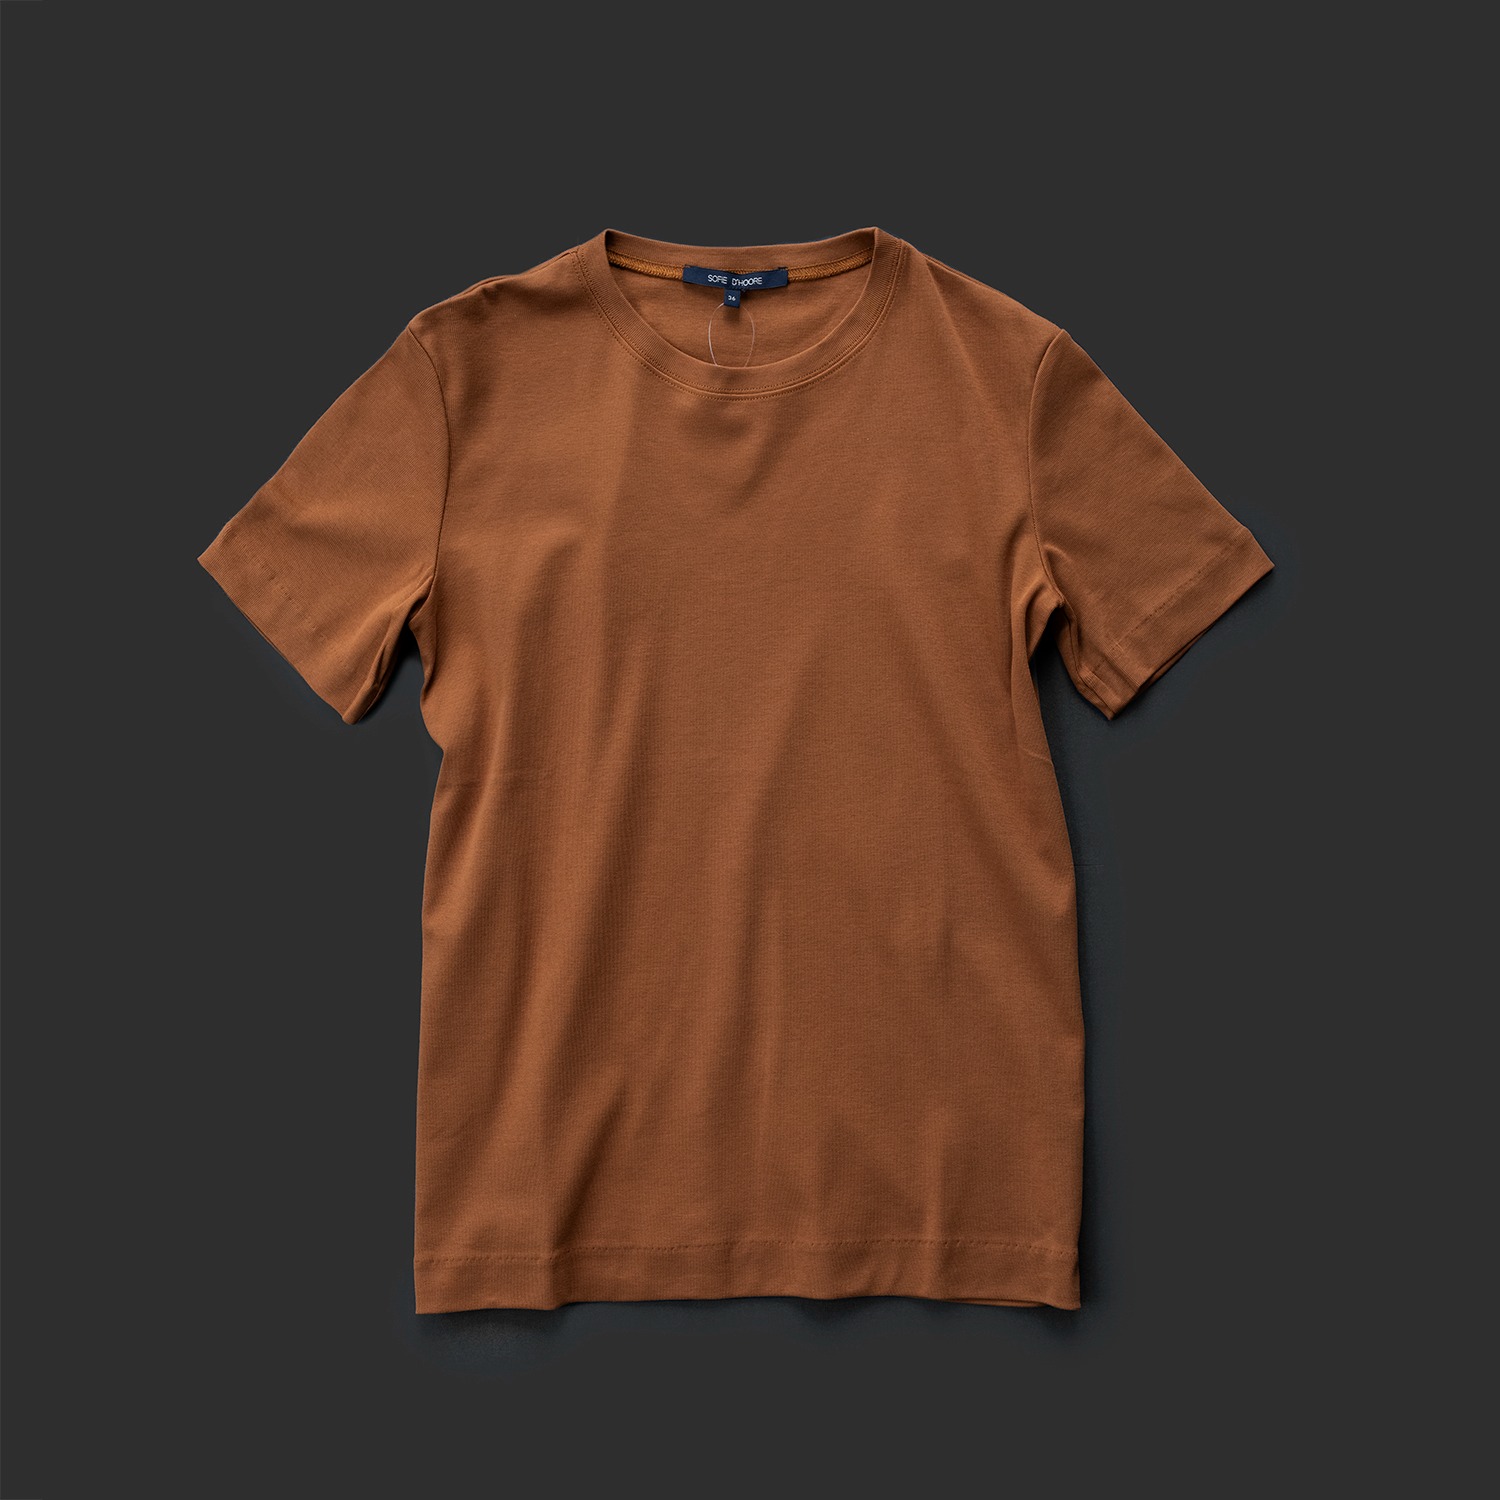 ﻿Tally T-shirt - 3size